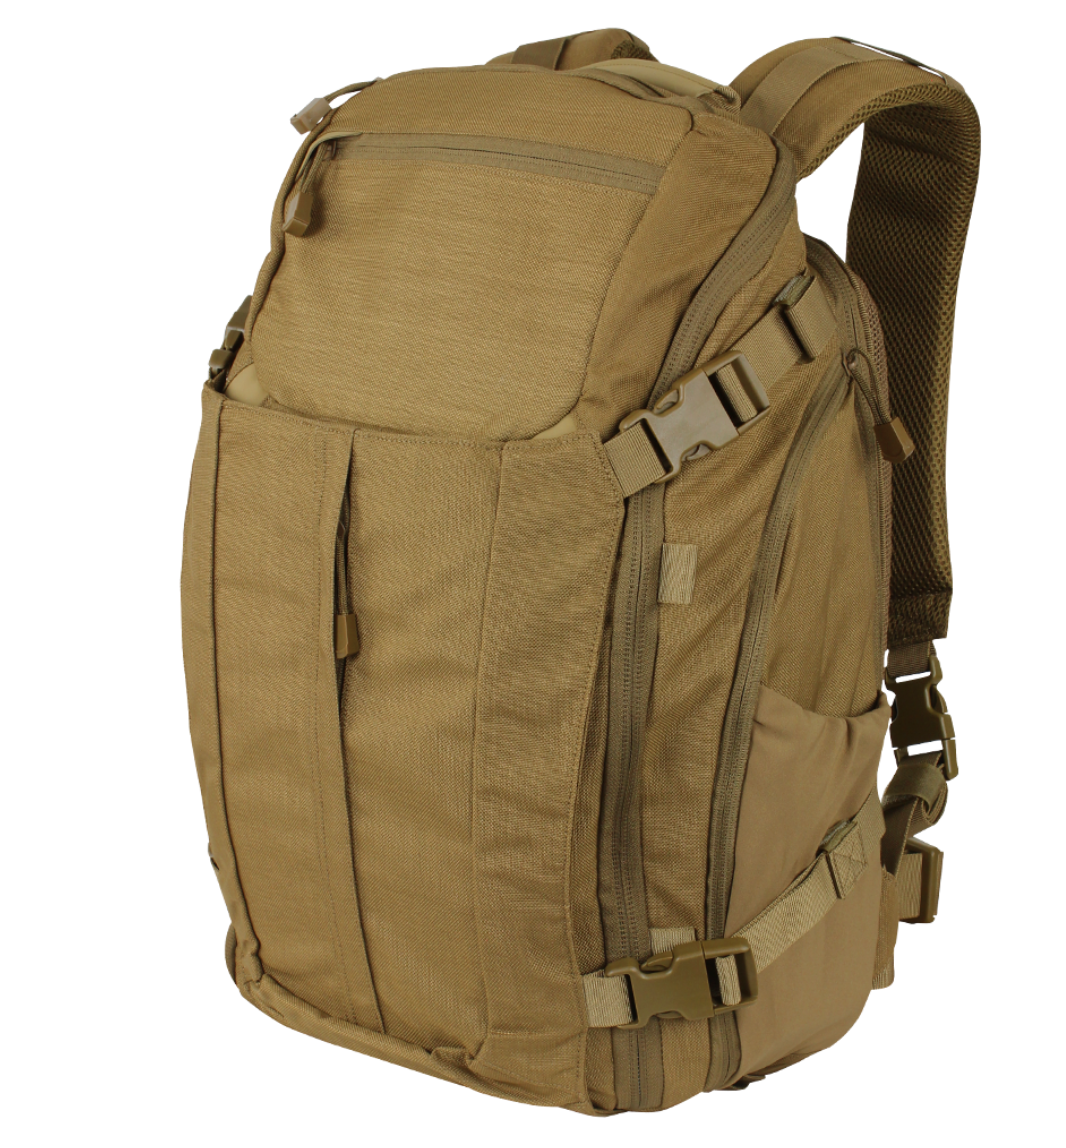 Condor Solveig Assault Pack Gen II - Coyote Brown Bags, Packs and Cases Condor Outdoor Tactical Gear Supplier Tactical Distributors Australia